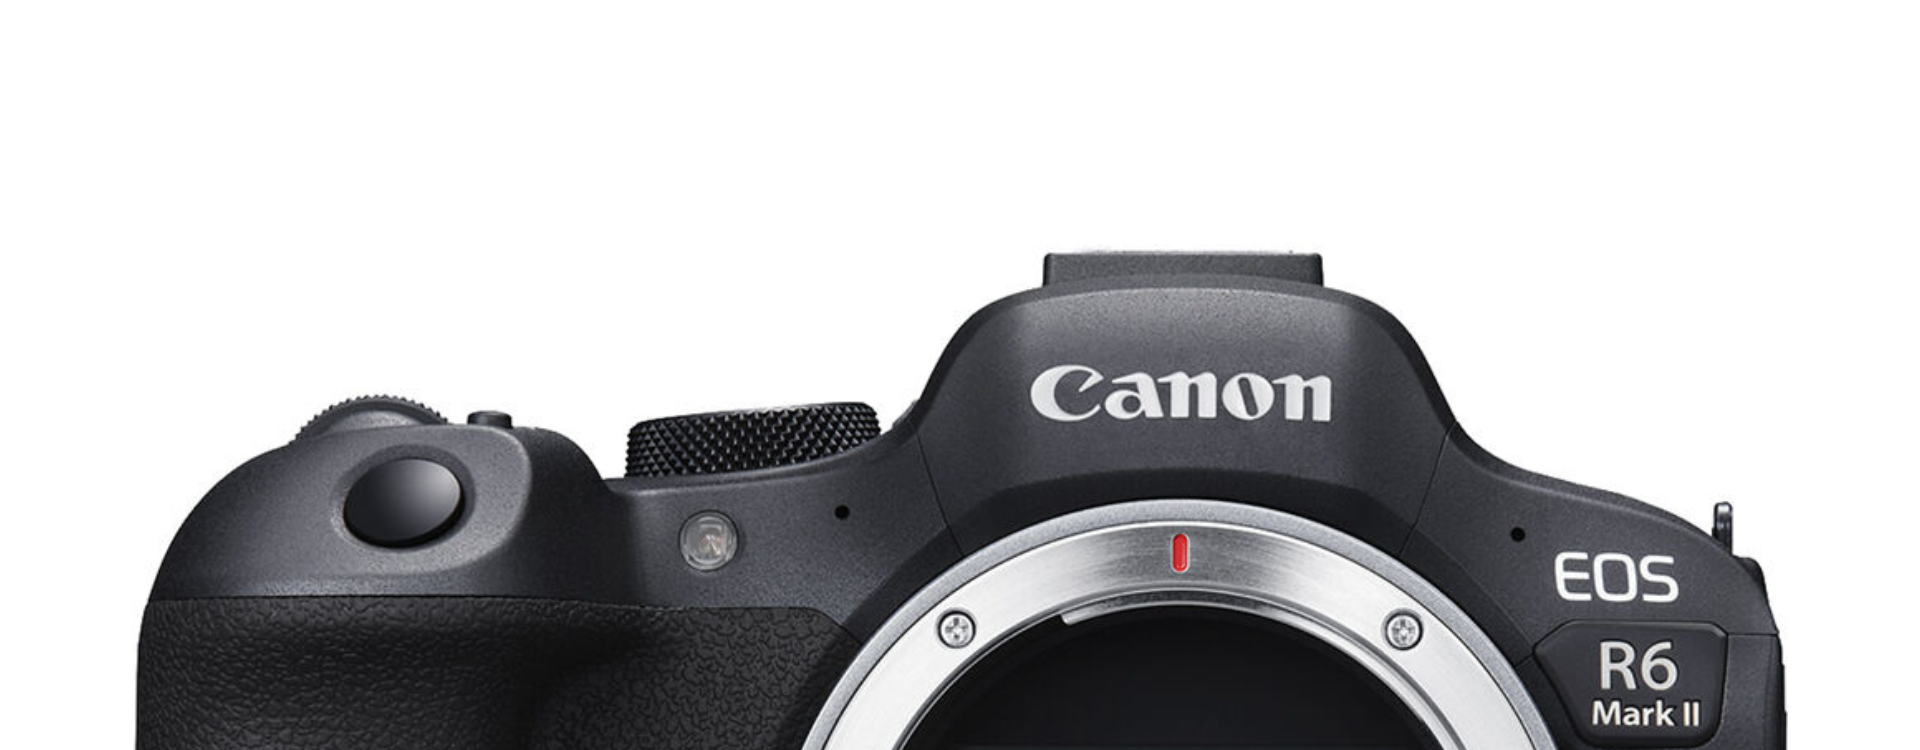 Introducing the Canon EOS R6 Mark II 